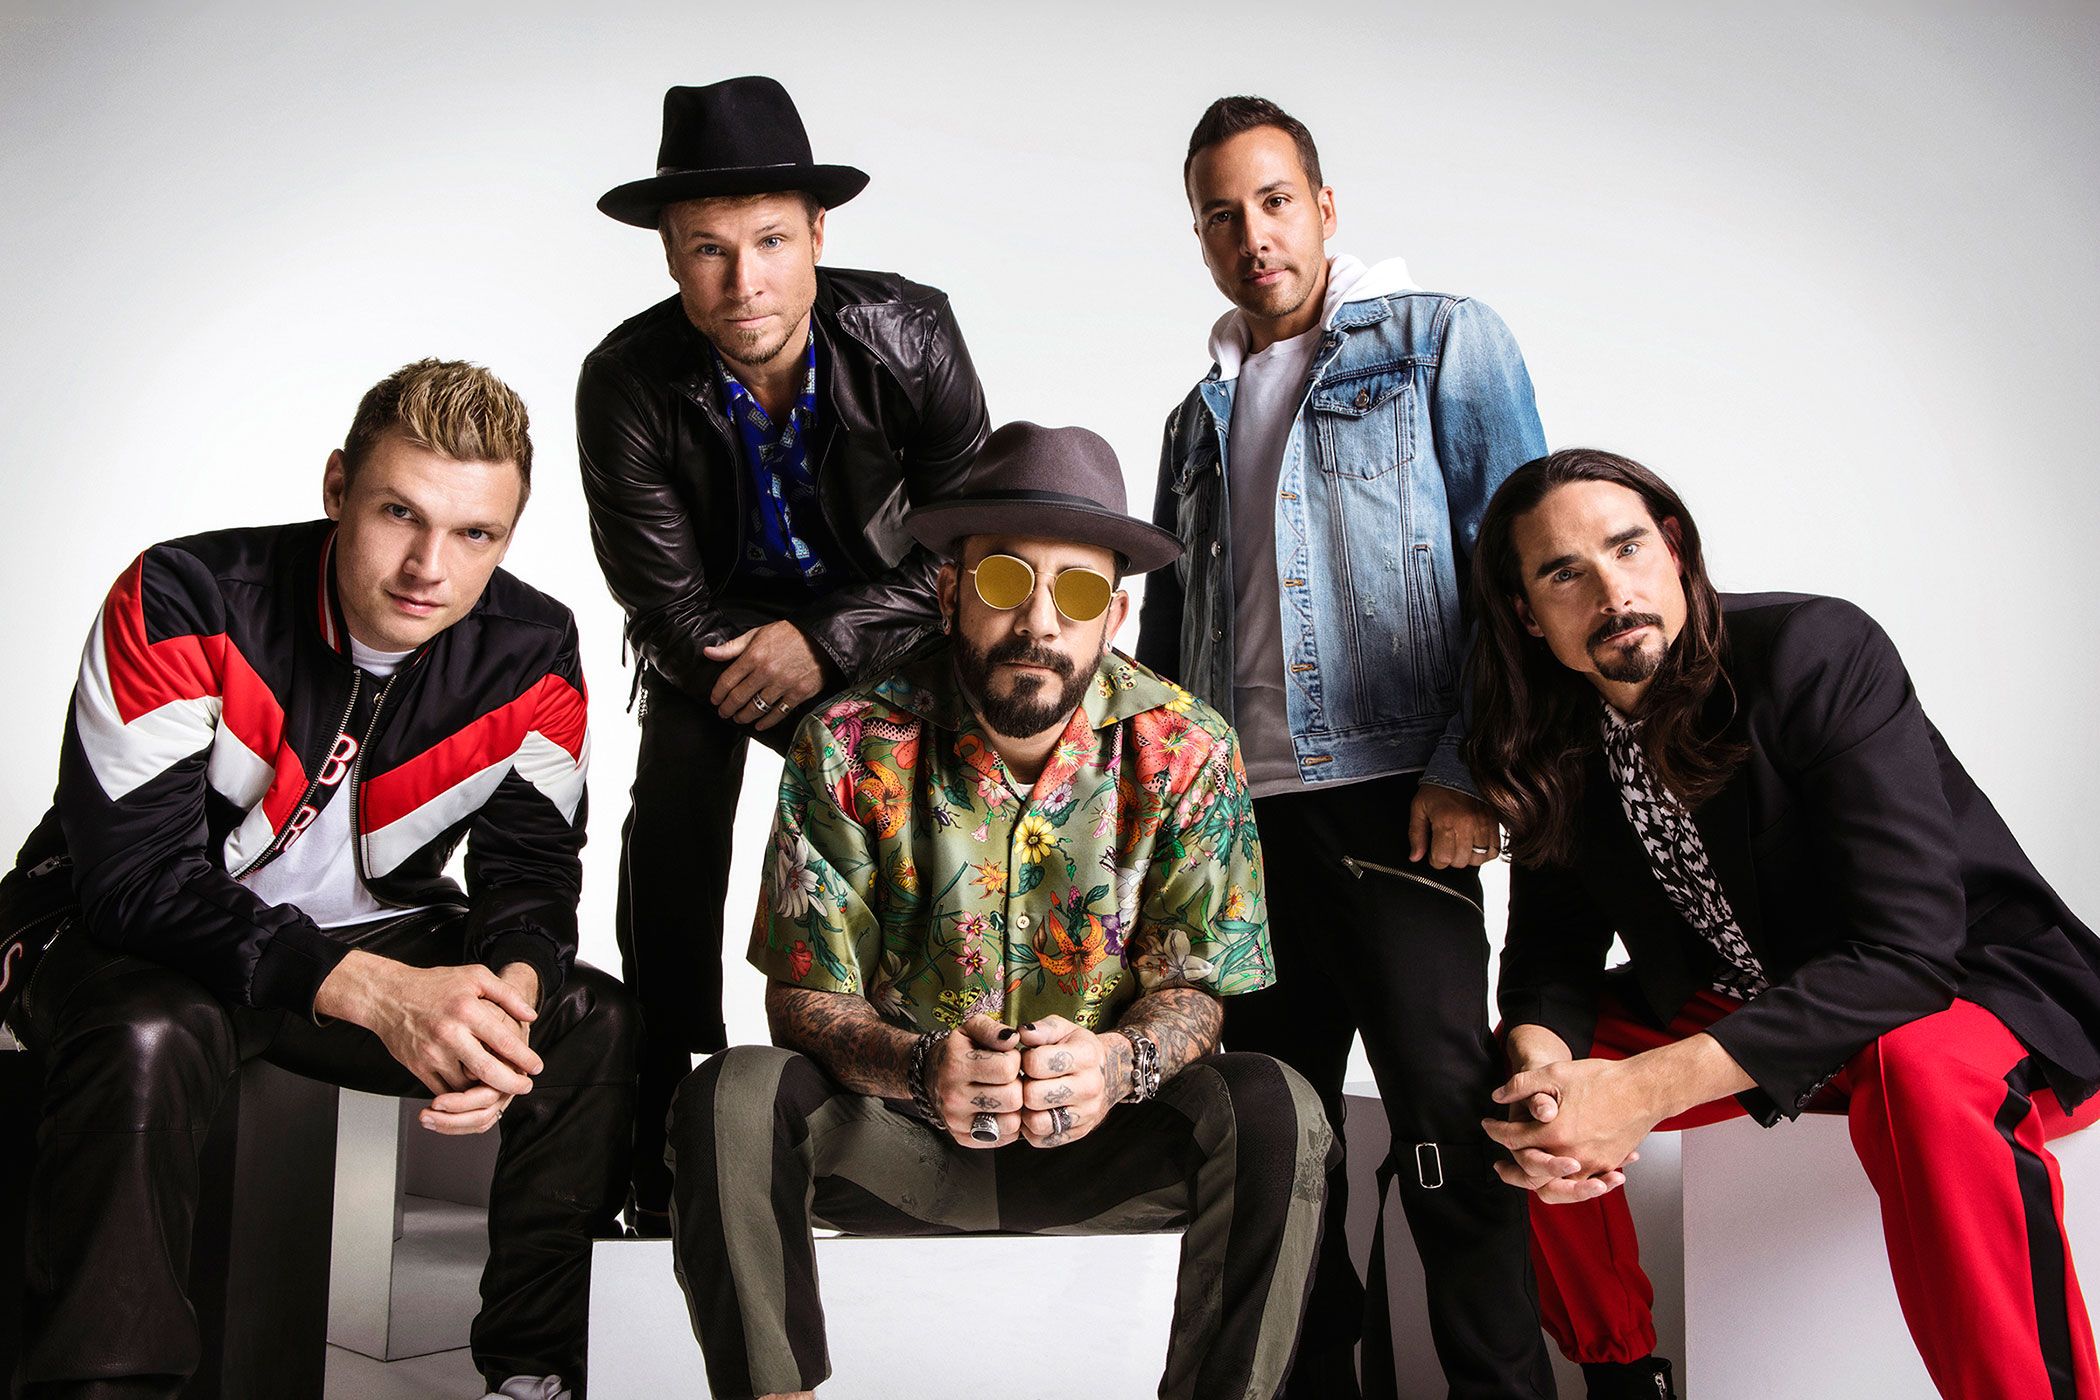 Backstreet Boys on 'DNA': We Found Our Chemistry Again